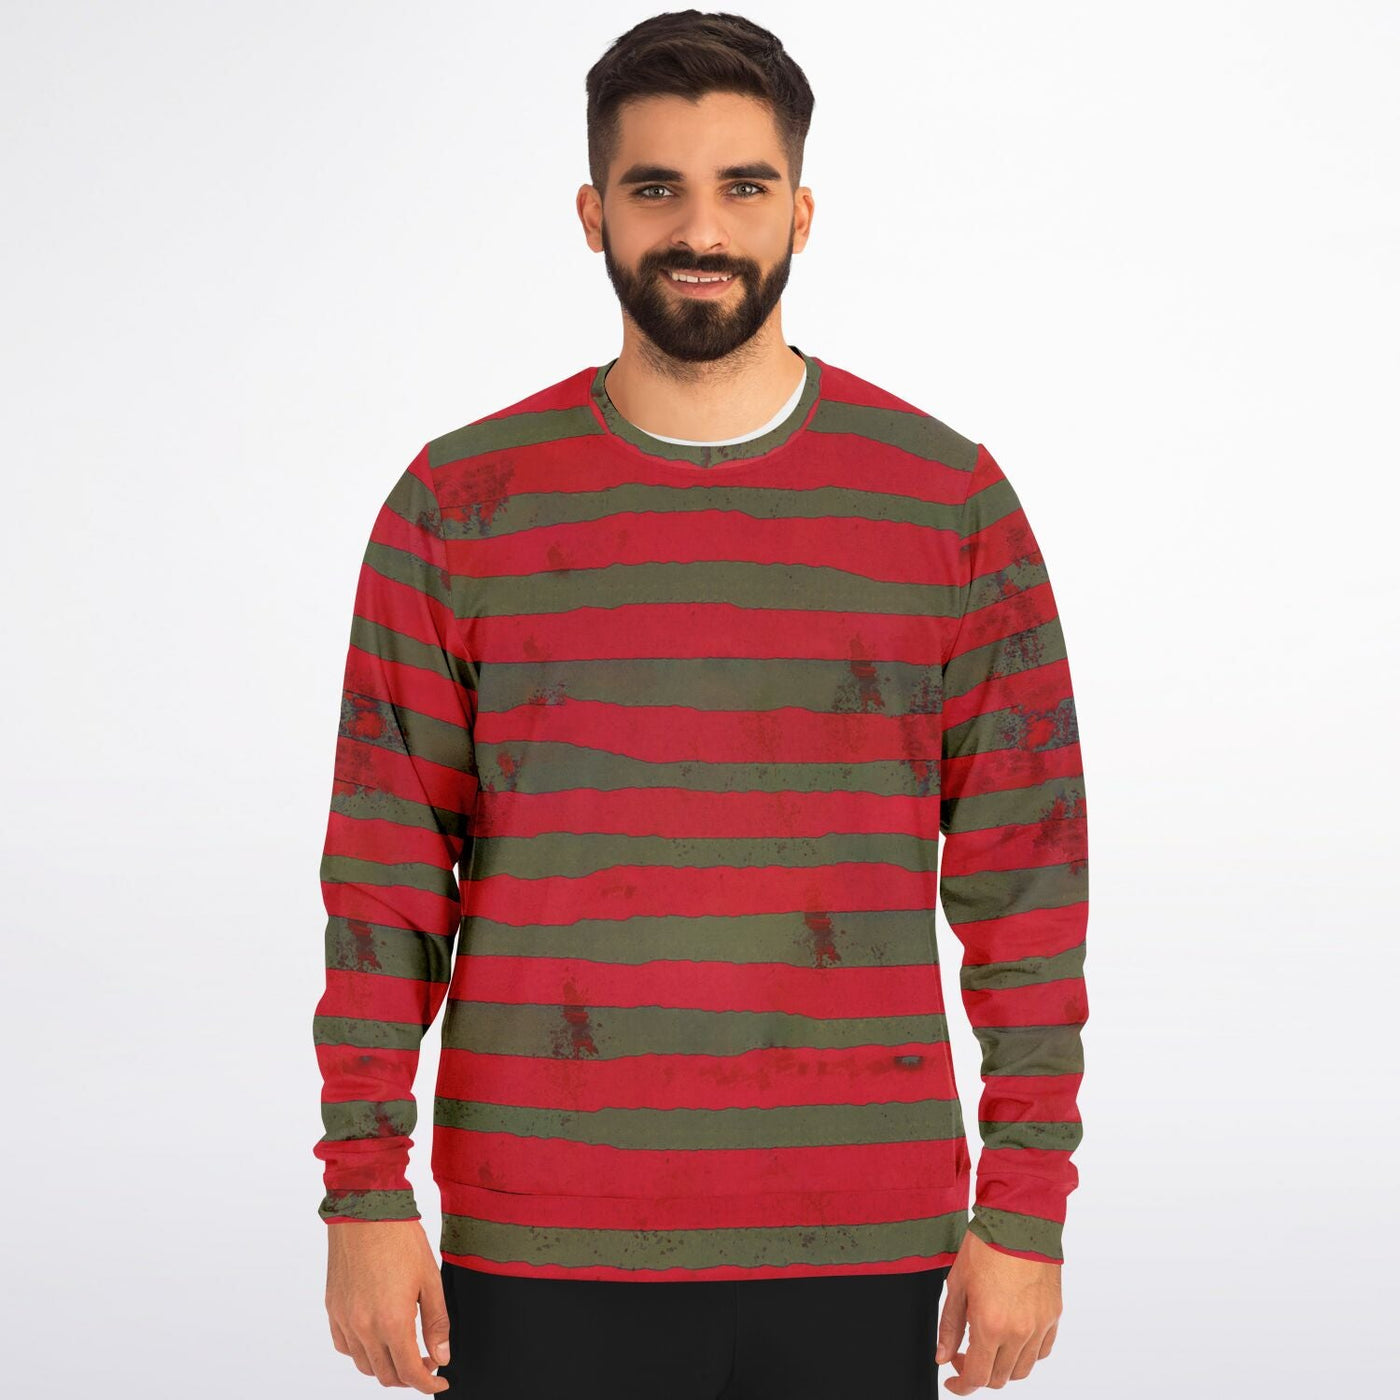 Krueger's Sweater - Freddy Krueger | Horror Freak Hoodie